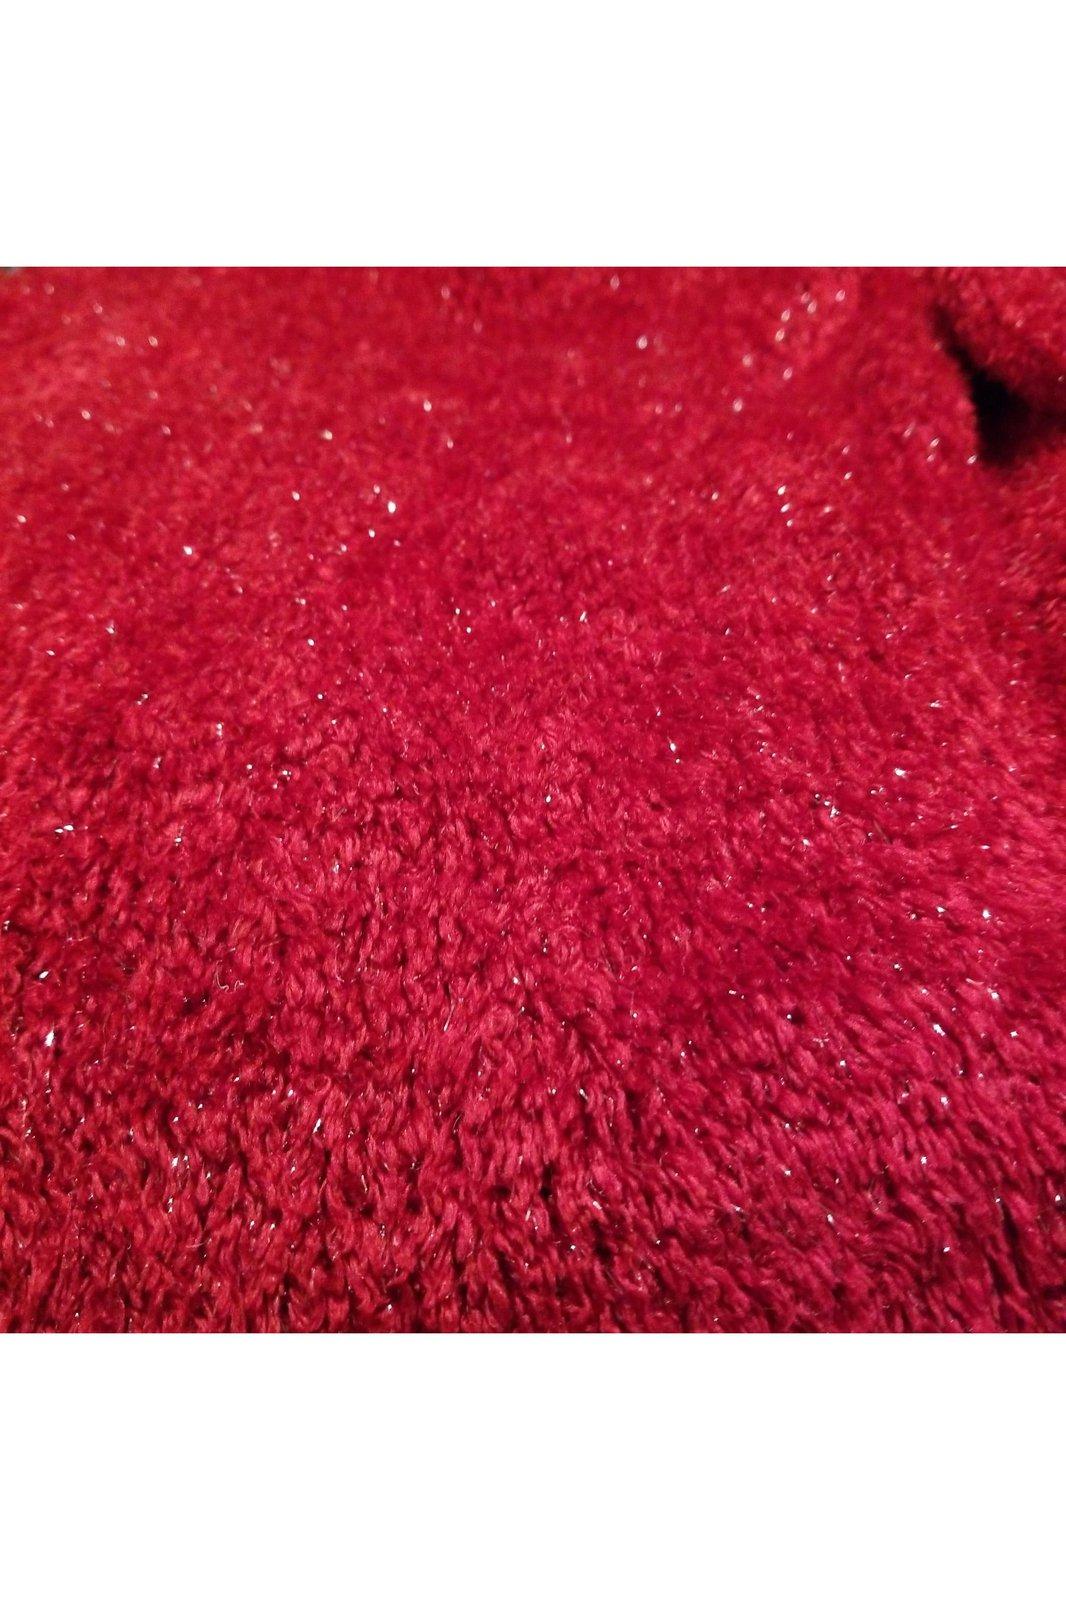 Norton McNaughton red turtleneck sweater sz XL